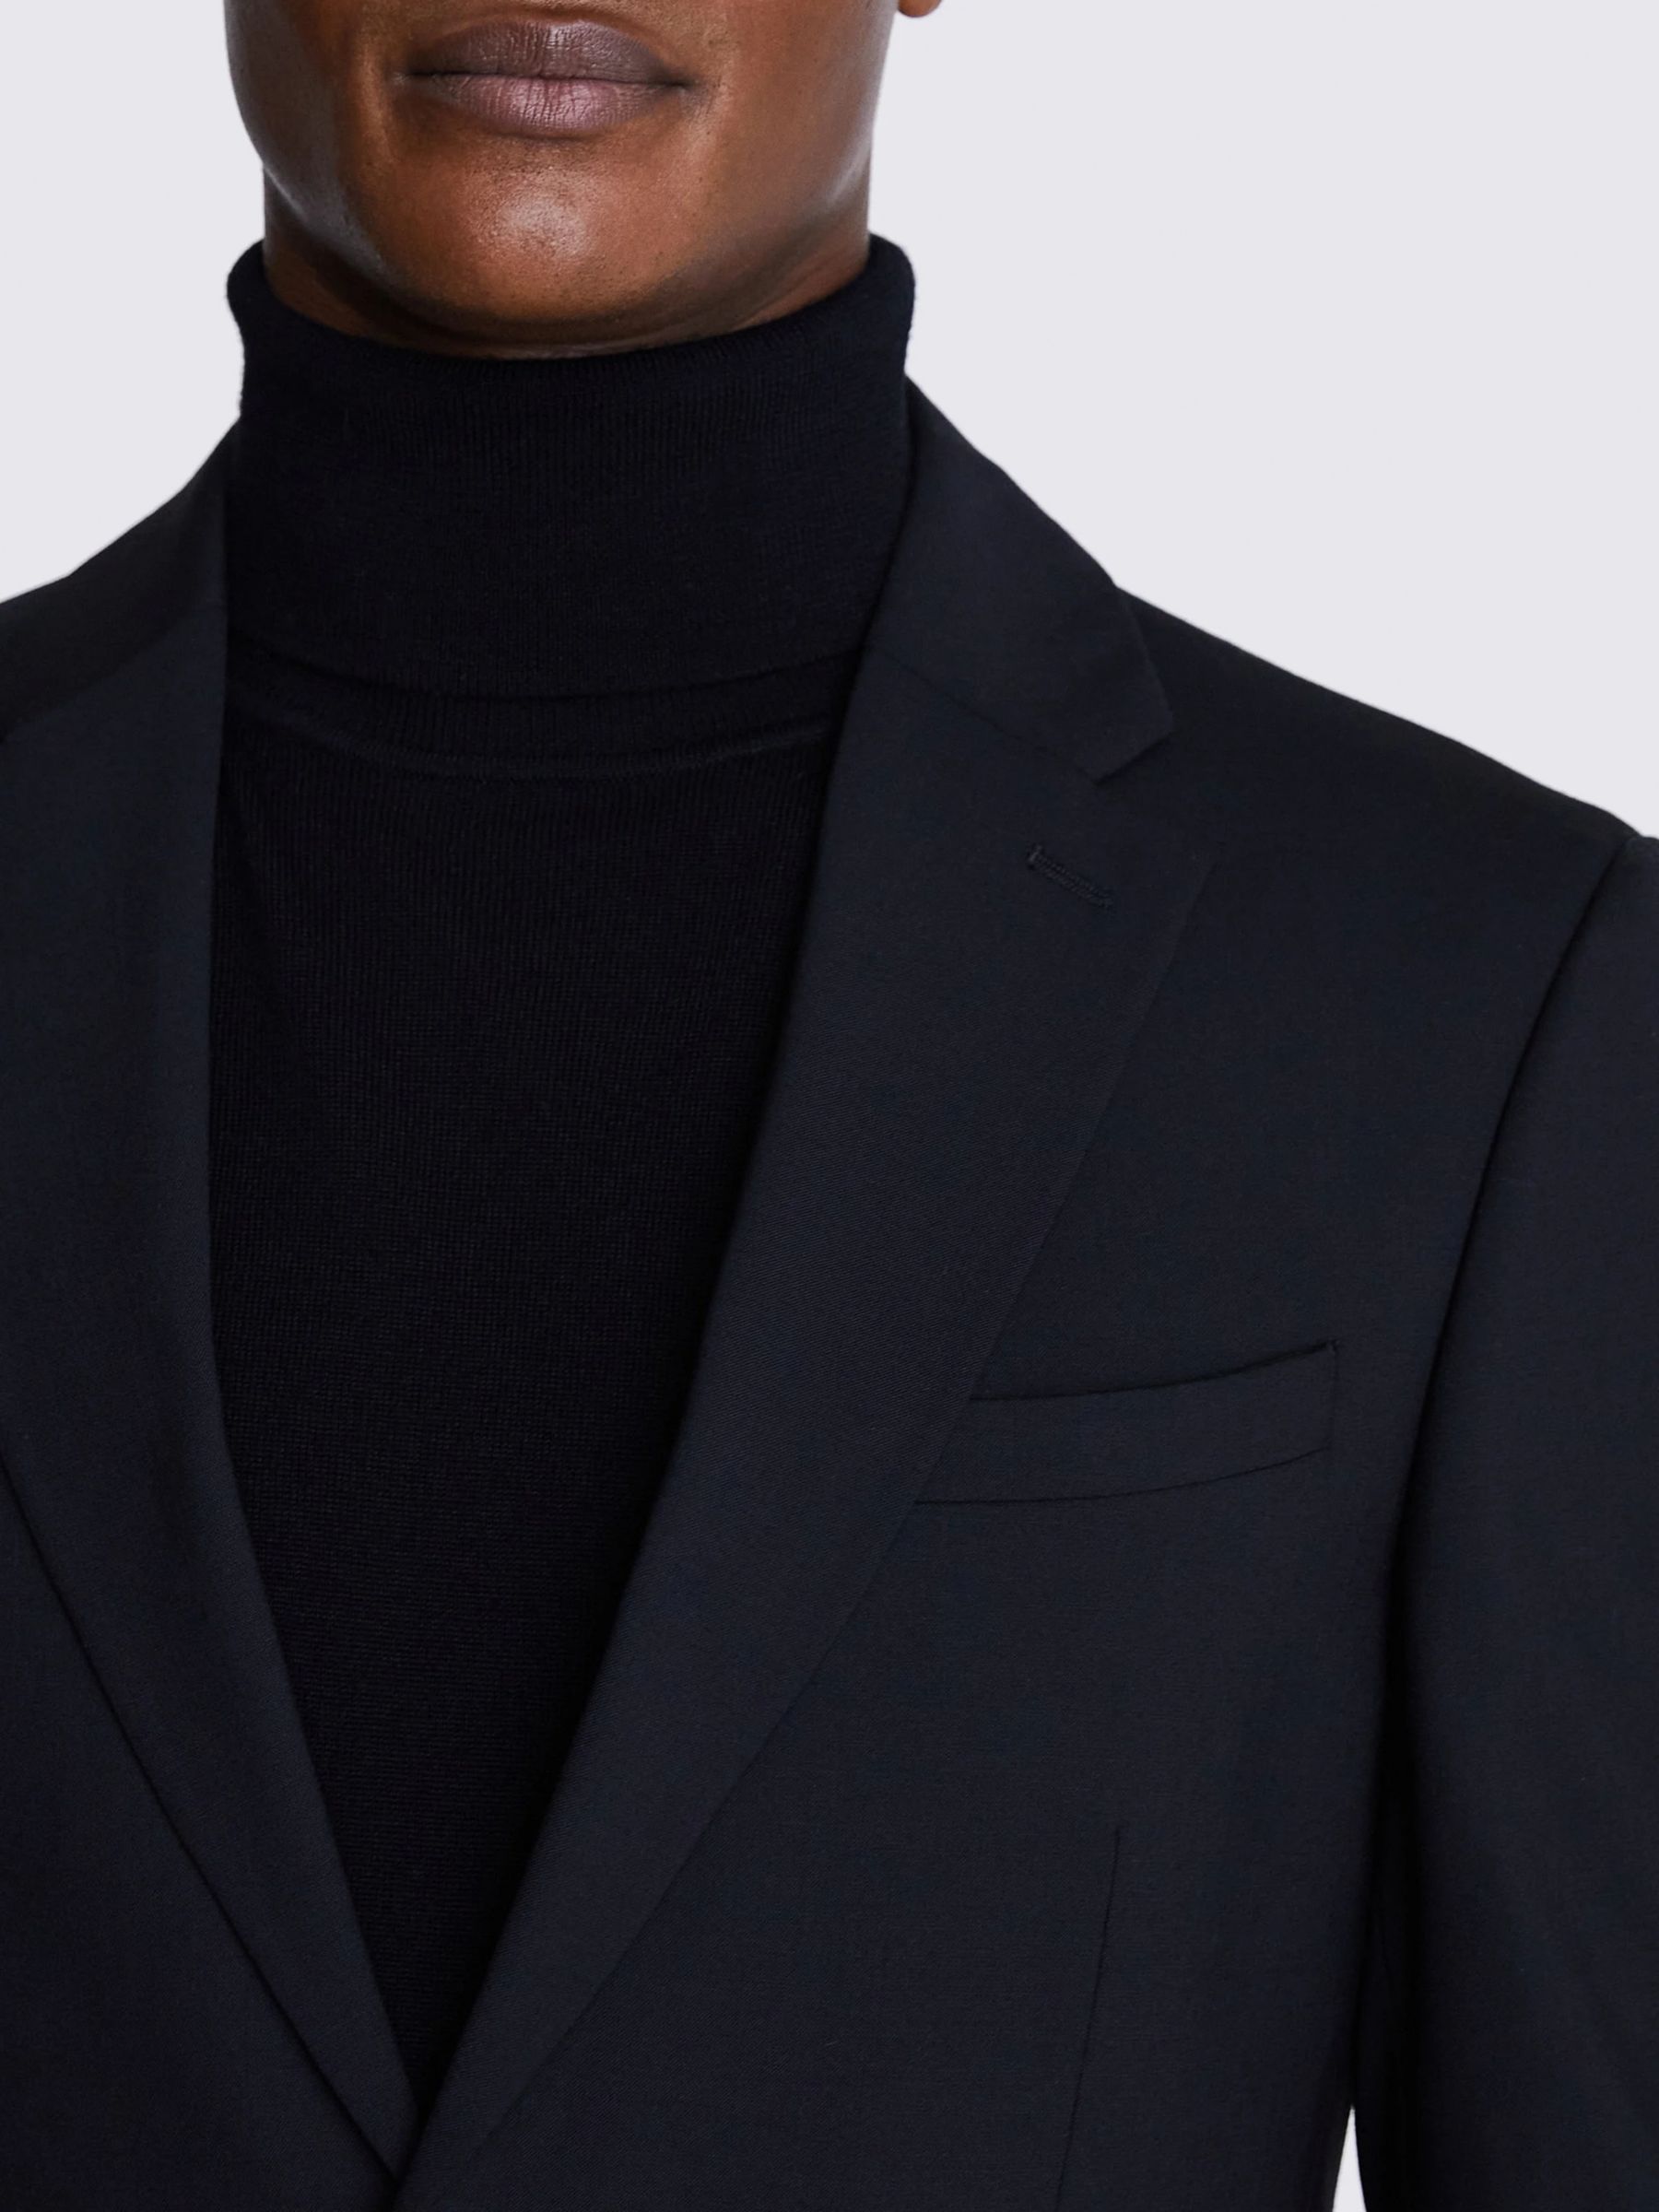 Moss x DKNY Wool Blend Slim Fit Suit Jacket, Black at John Lewis & Partners